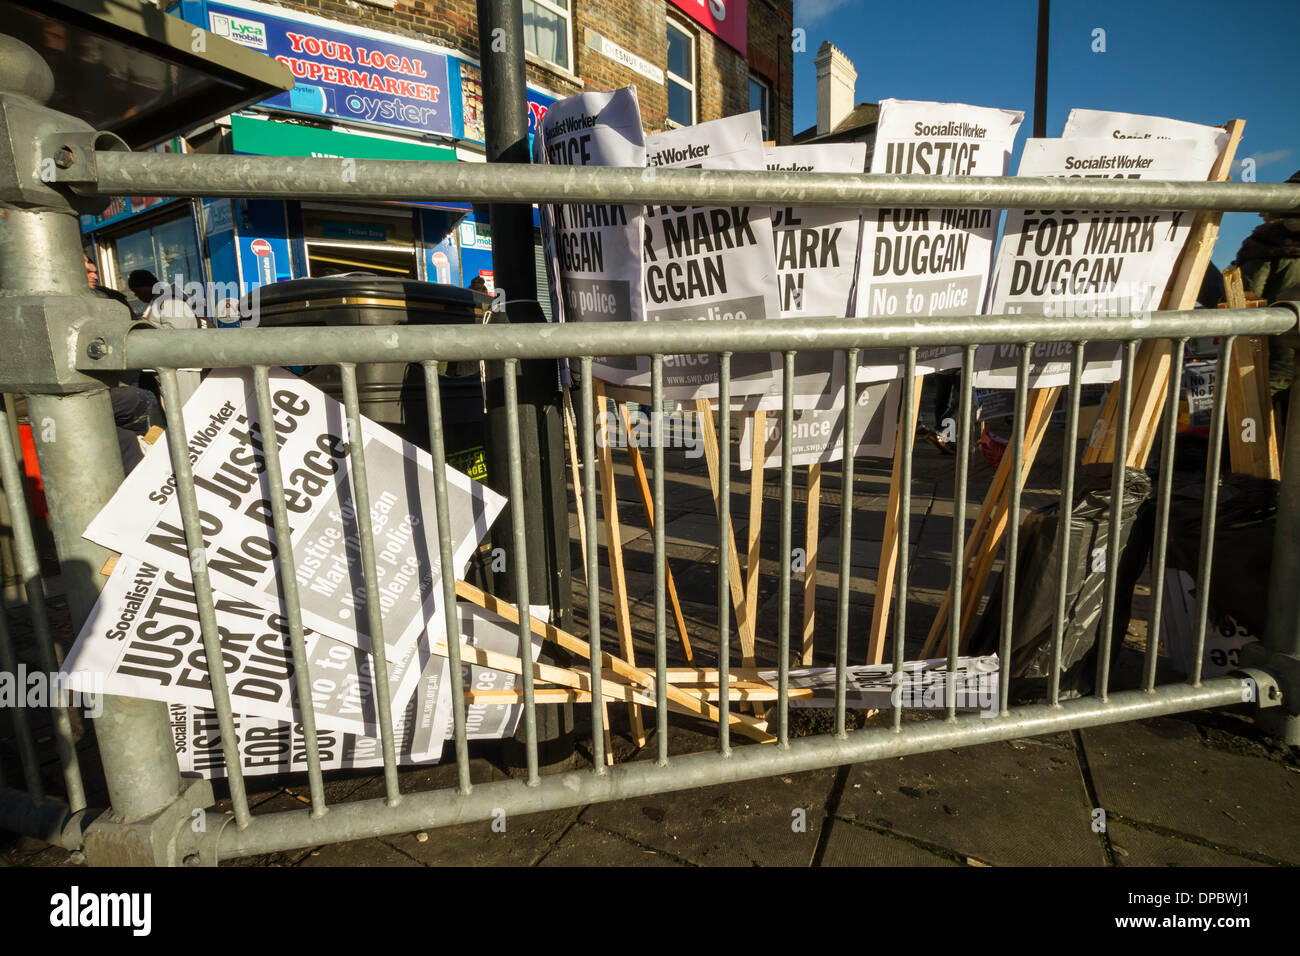 Mark Duggan veglia fuori Tottenham stazione di polizia di Londra Foto Stock